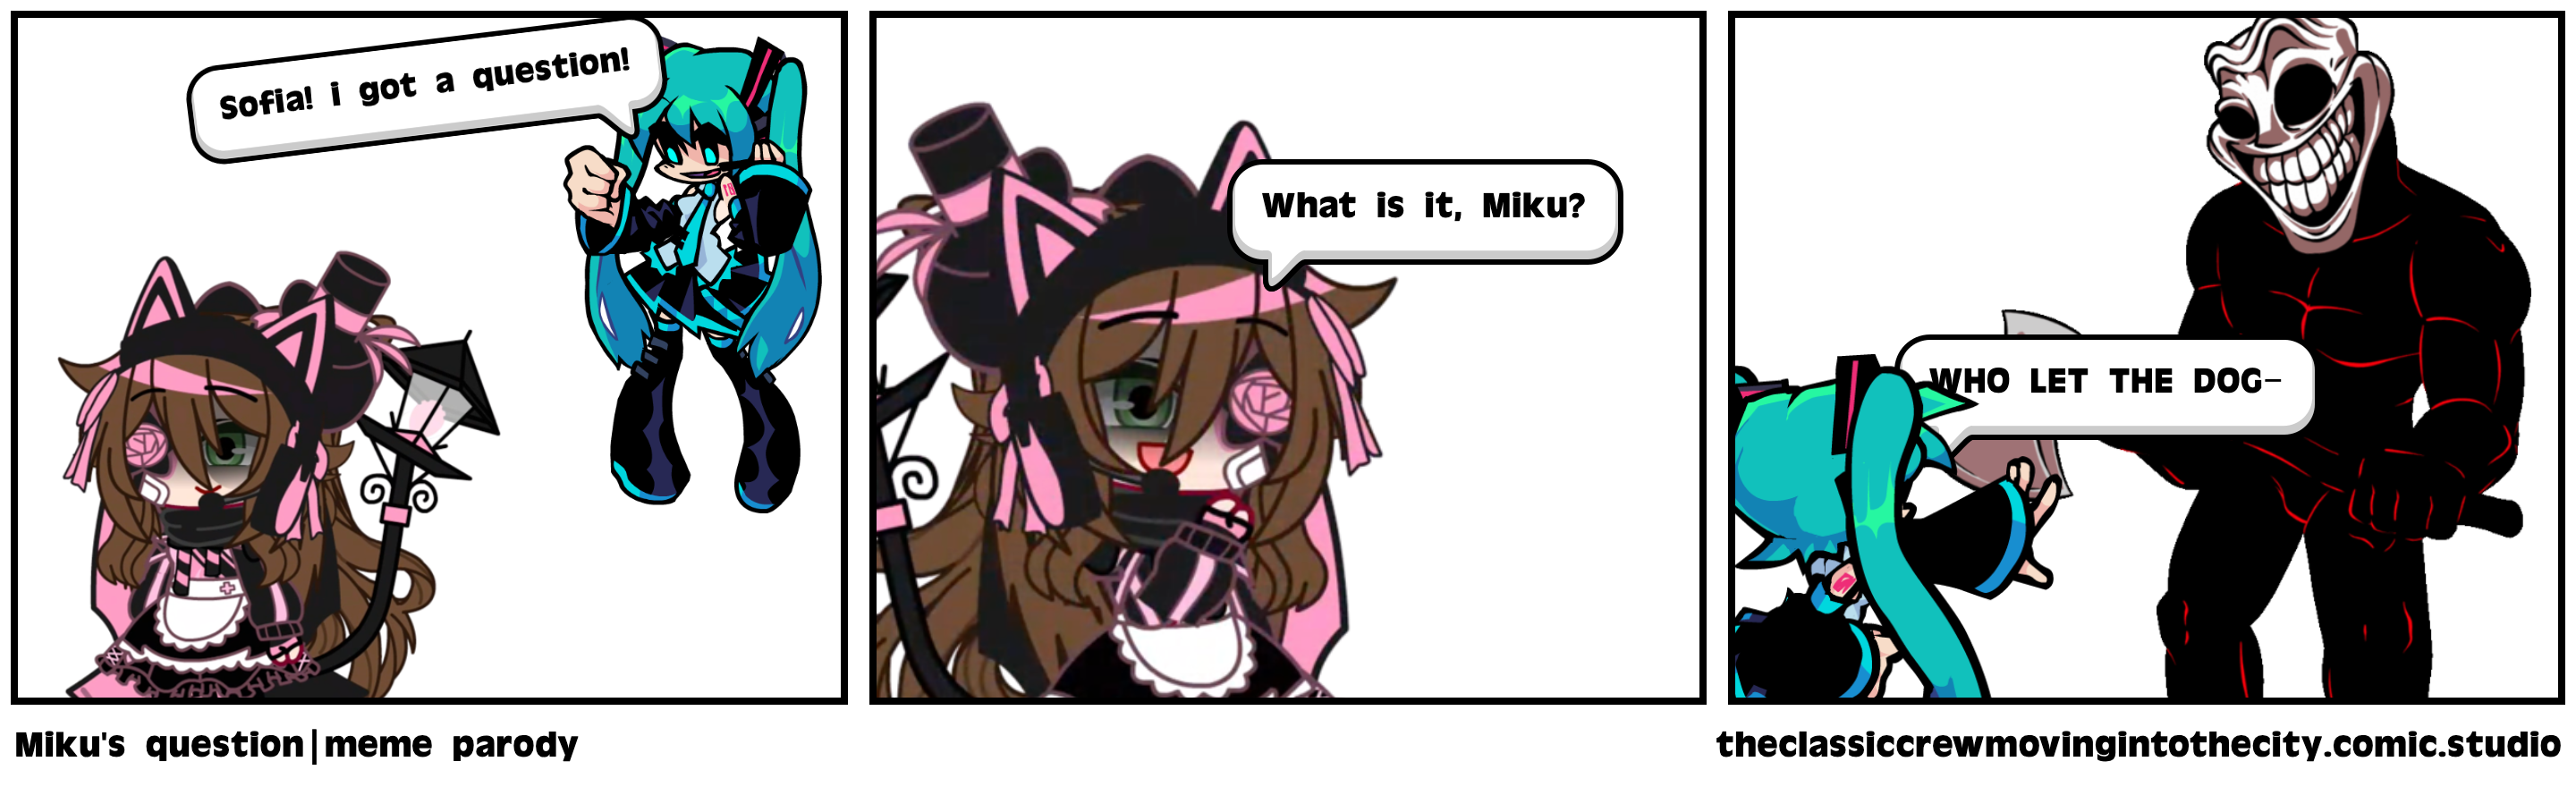 Miku's question|meme parody